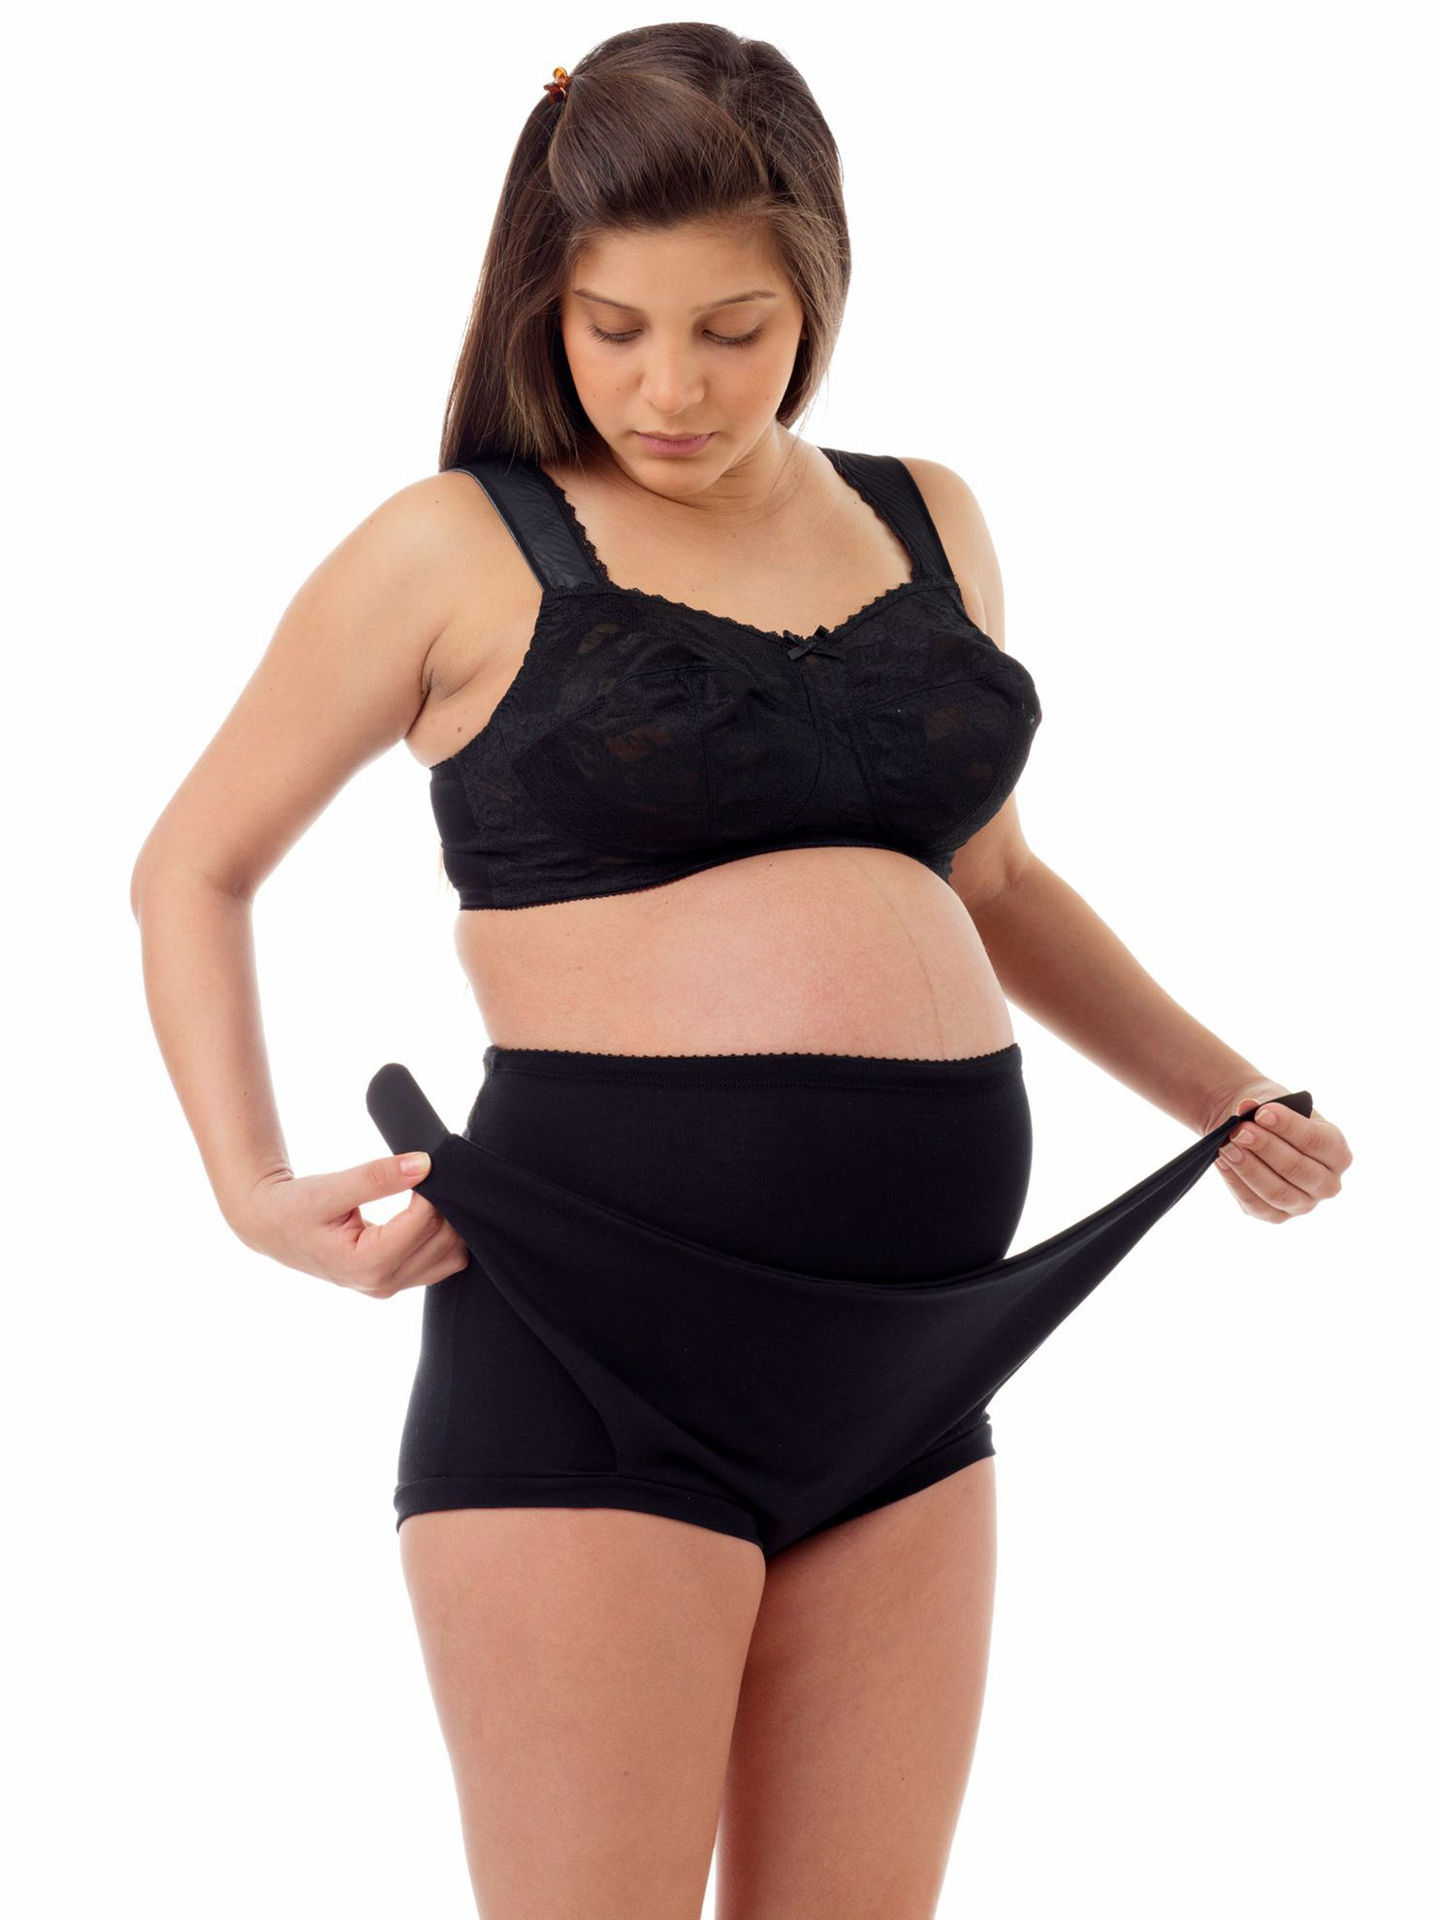 Underworks Maternity Back and Tummy Support Girdle with Varicosity Belt -  White - XS